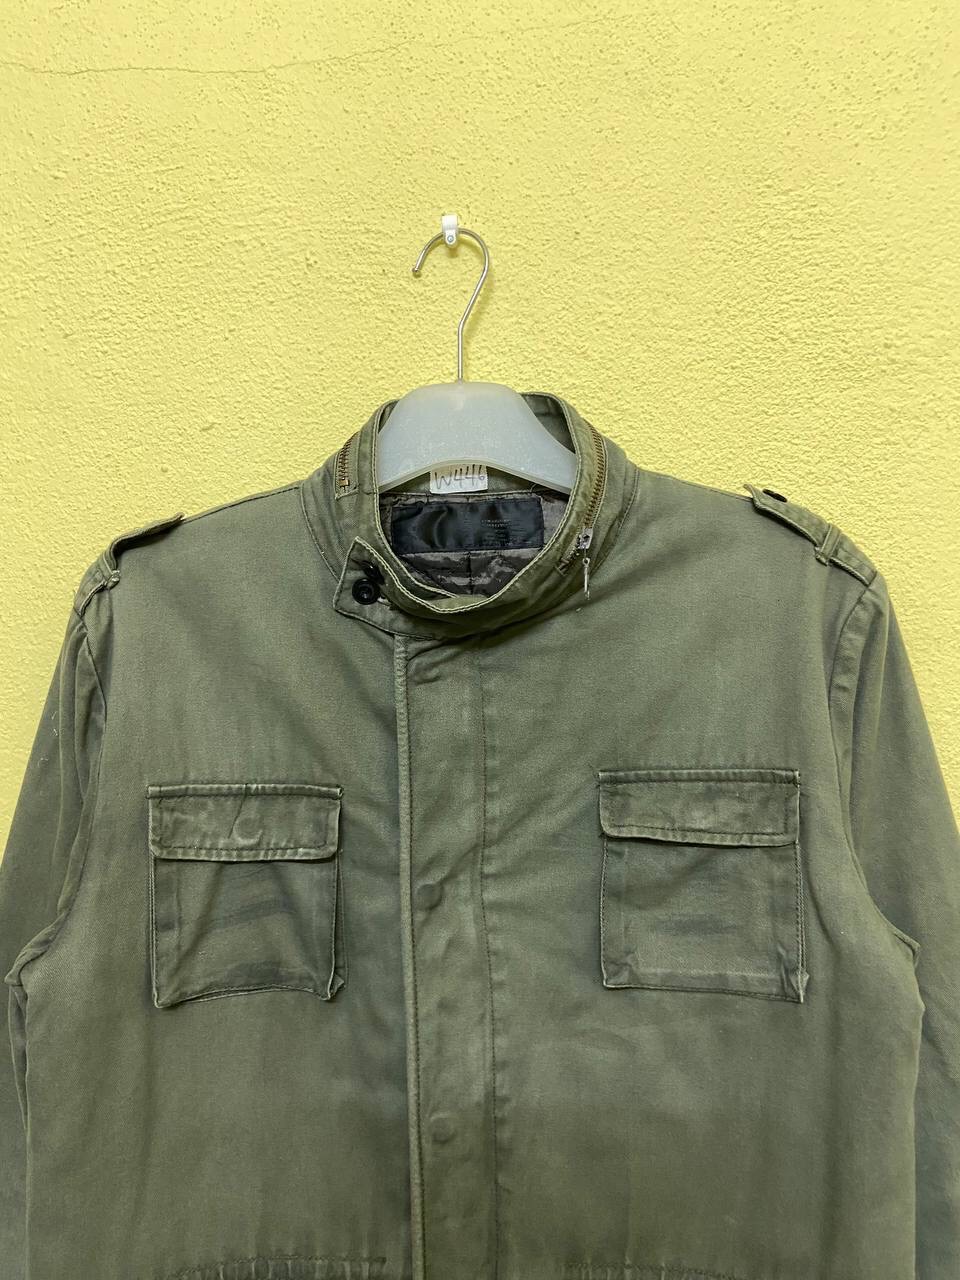 N Hollywood Fishtail Army Jacket - 6